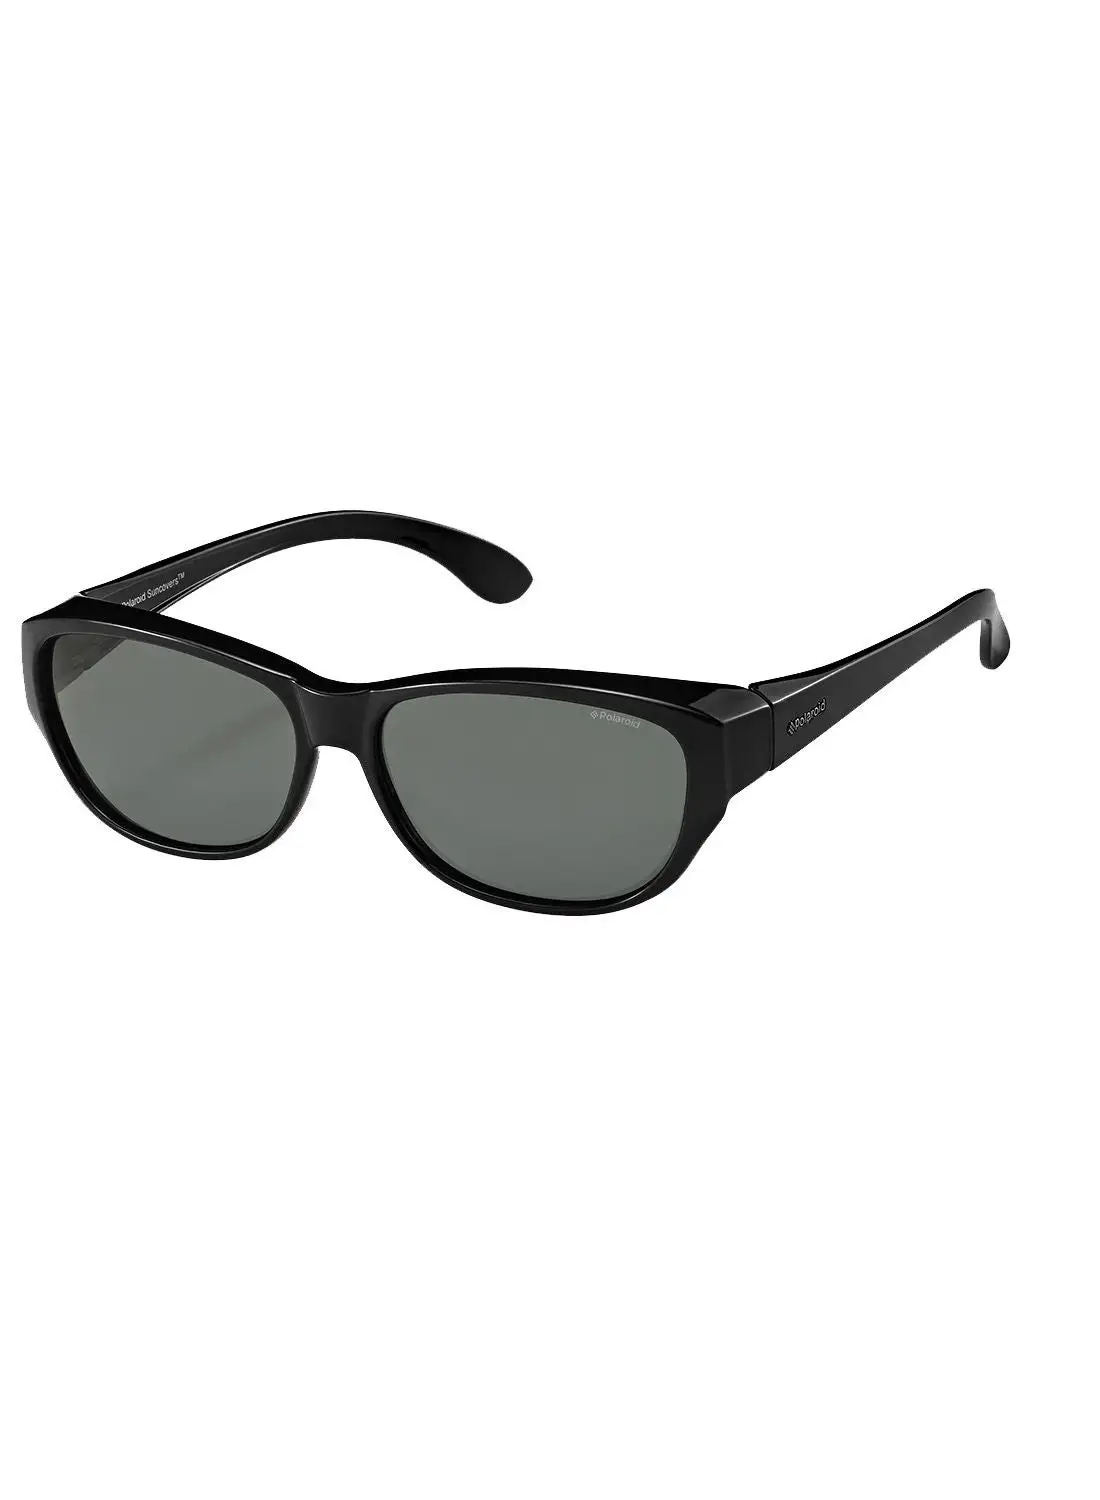 Polaroid Round / Oval Ancillaries Sunglasses P8407 BLACK 61